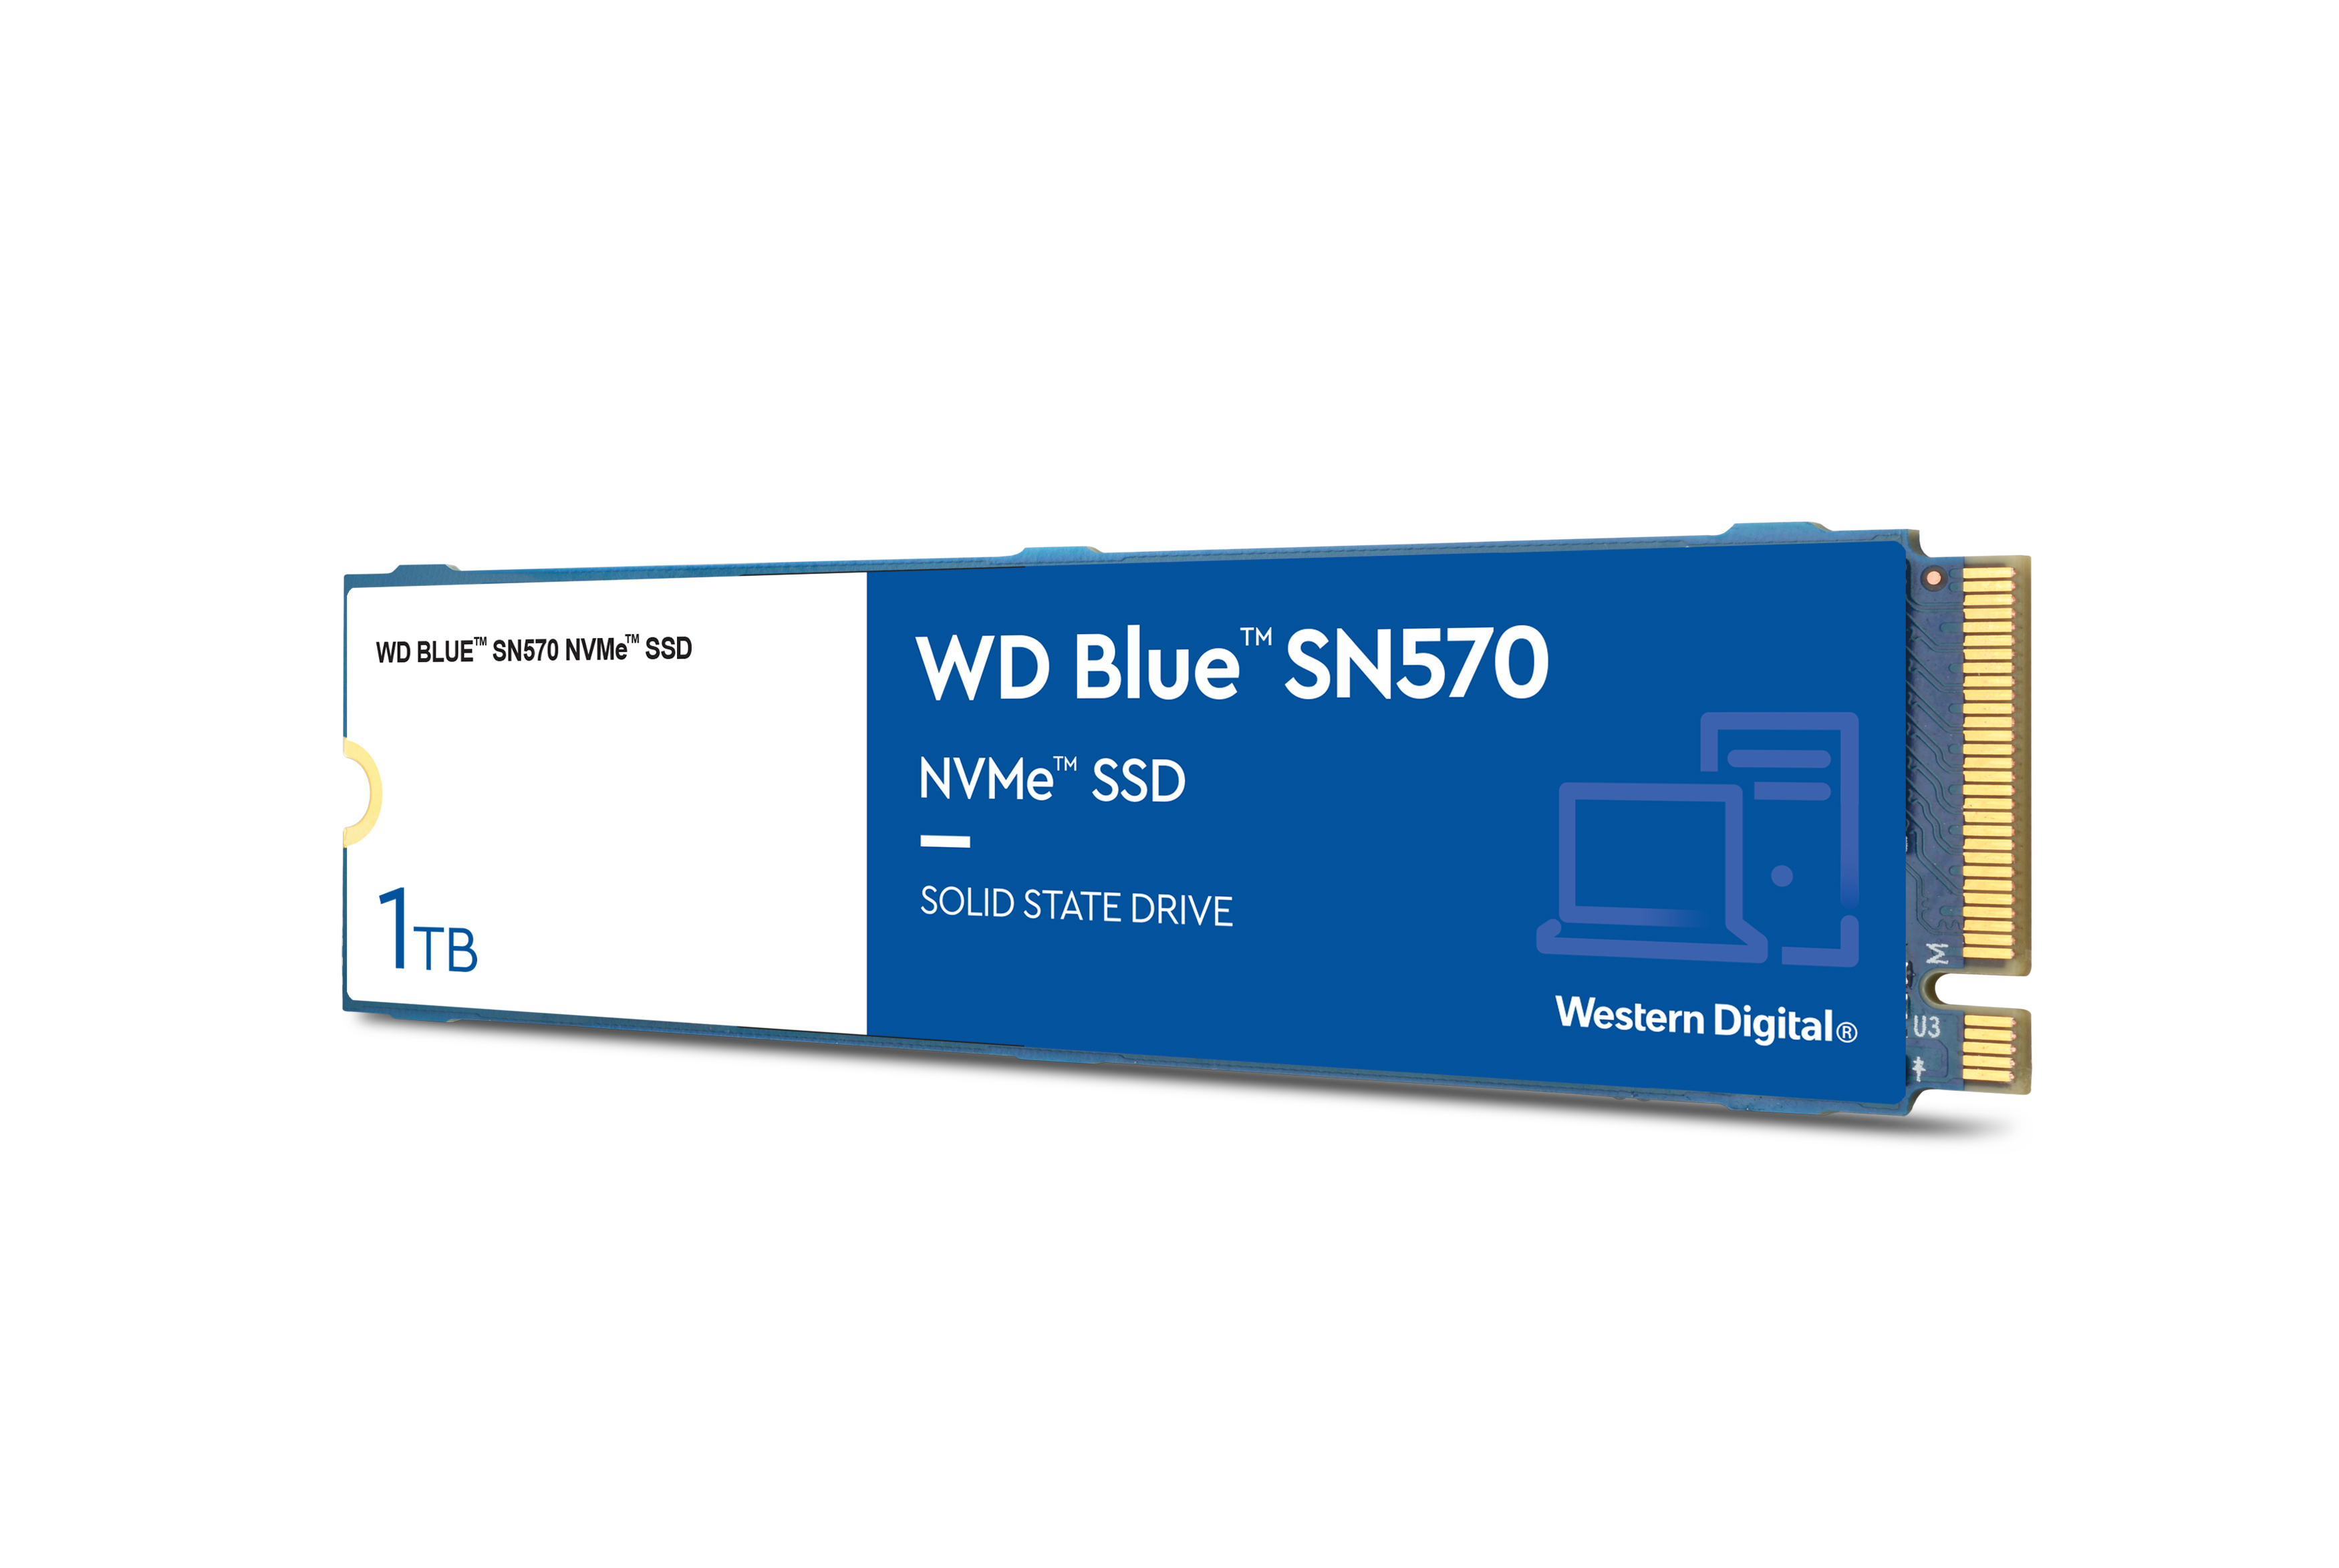 WDC WD Blue SN570 NVMe SSD prod img hero 1TB